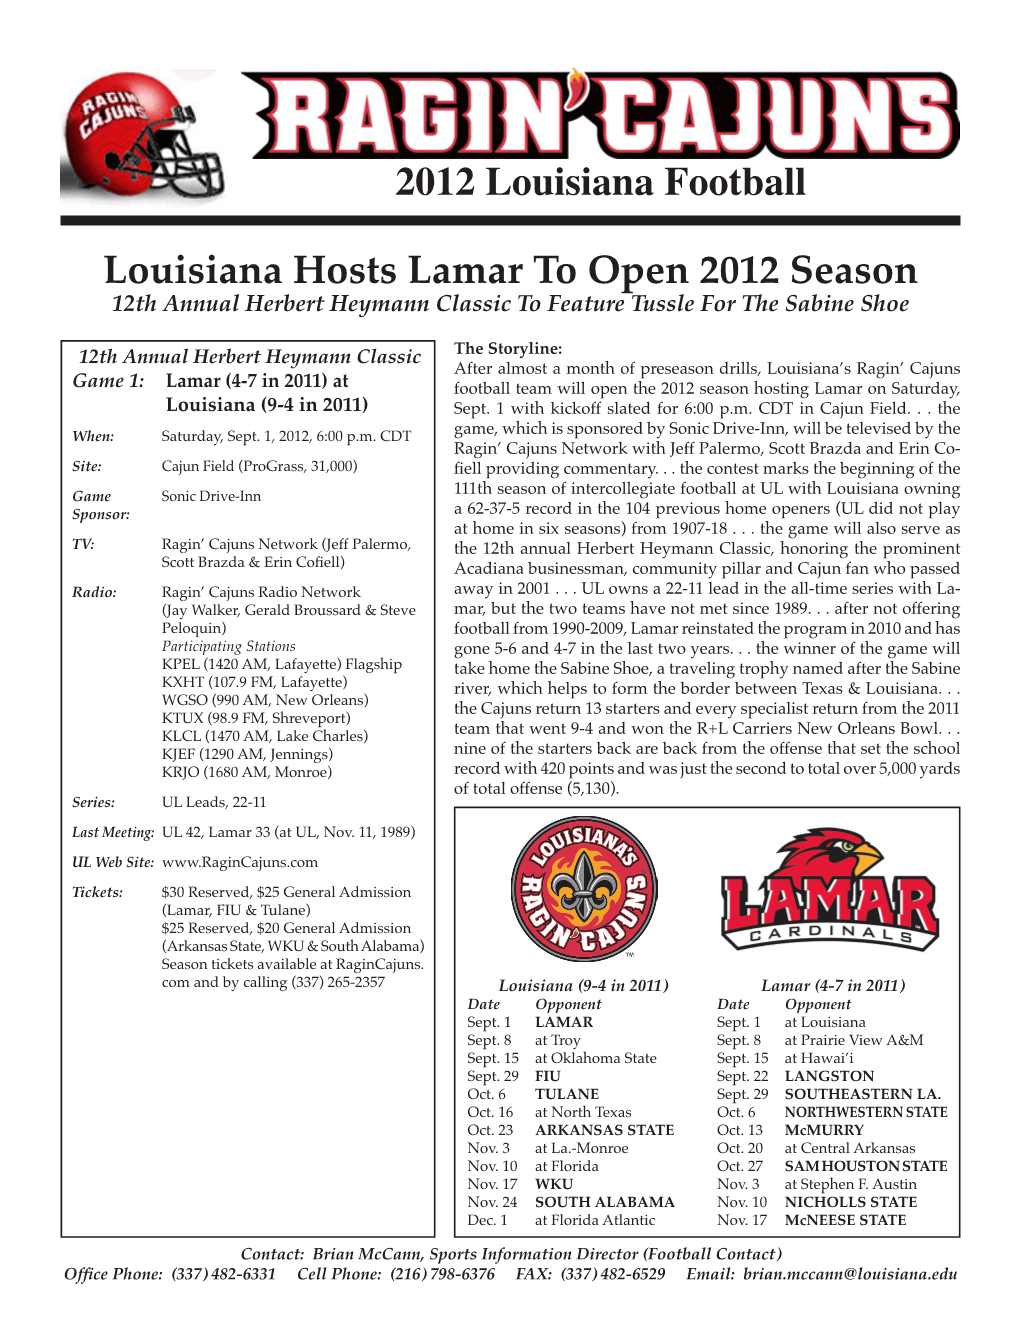 Louisiana Hosts Lamar to Open 2012 Season 2012 Louisiana Football